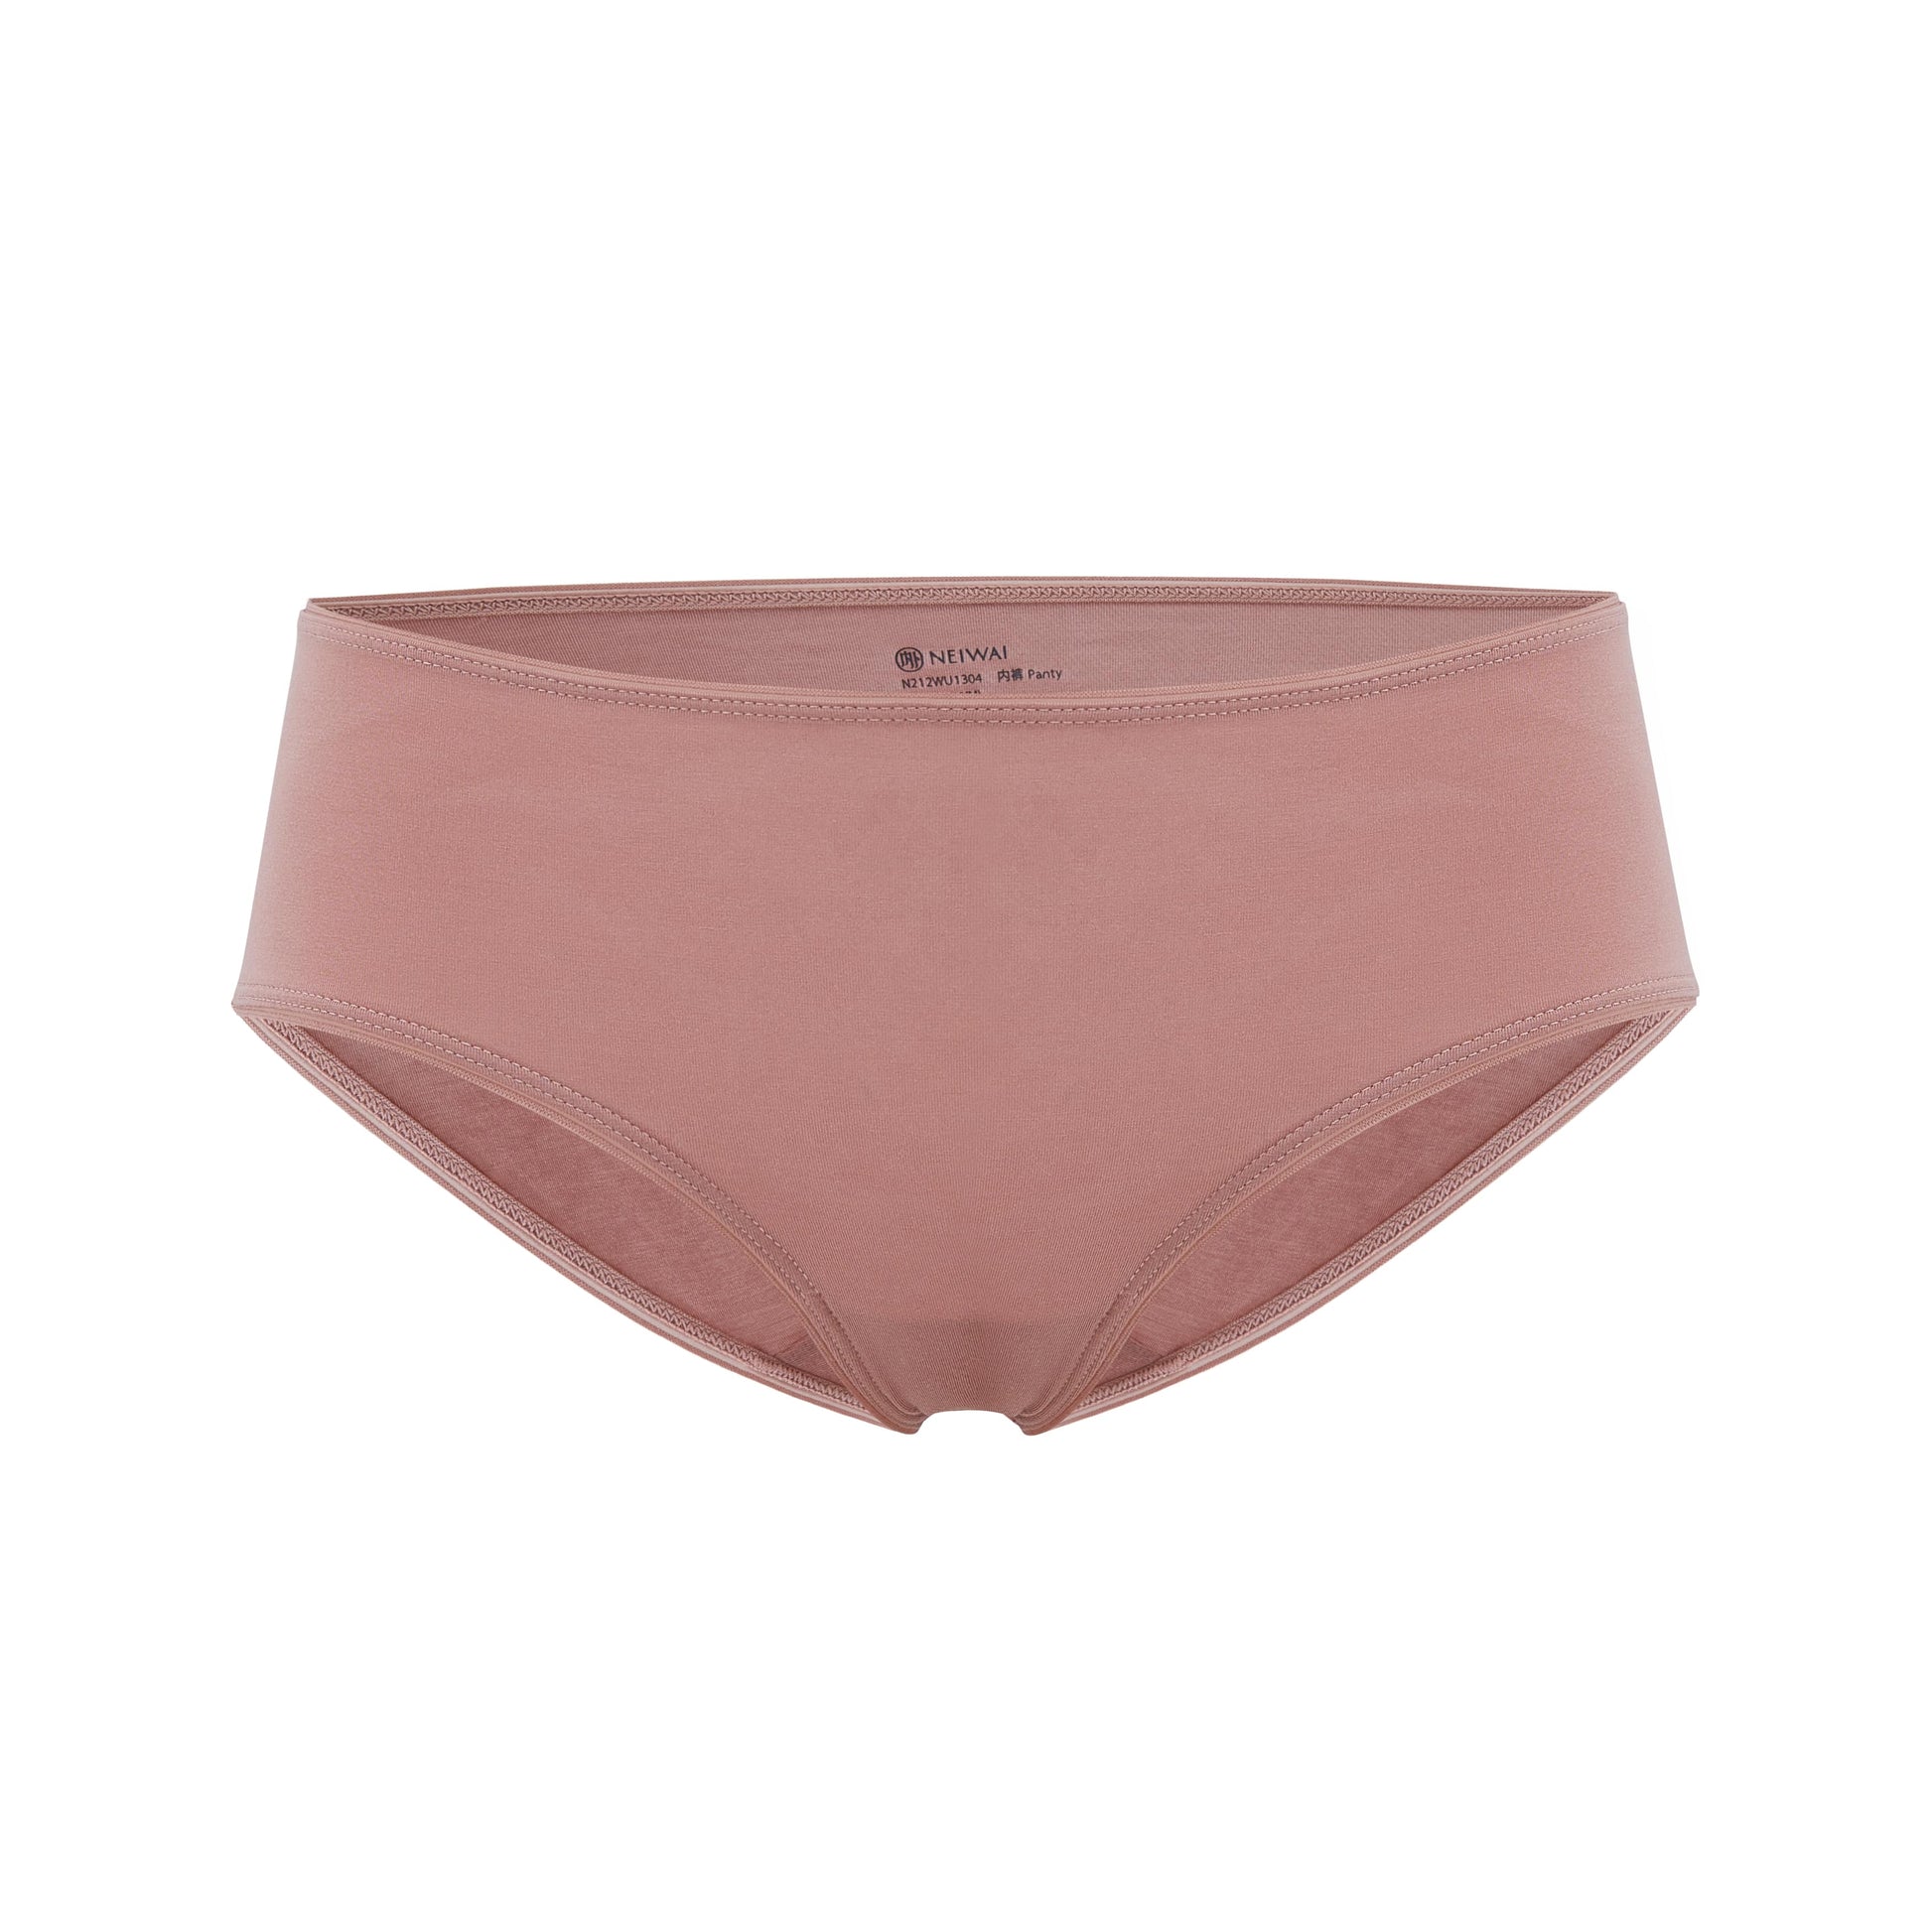 Women's Cotton Modal Hipster Underwear in Light Pink size XS